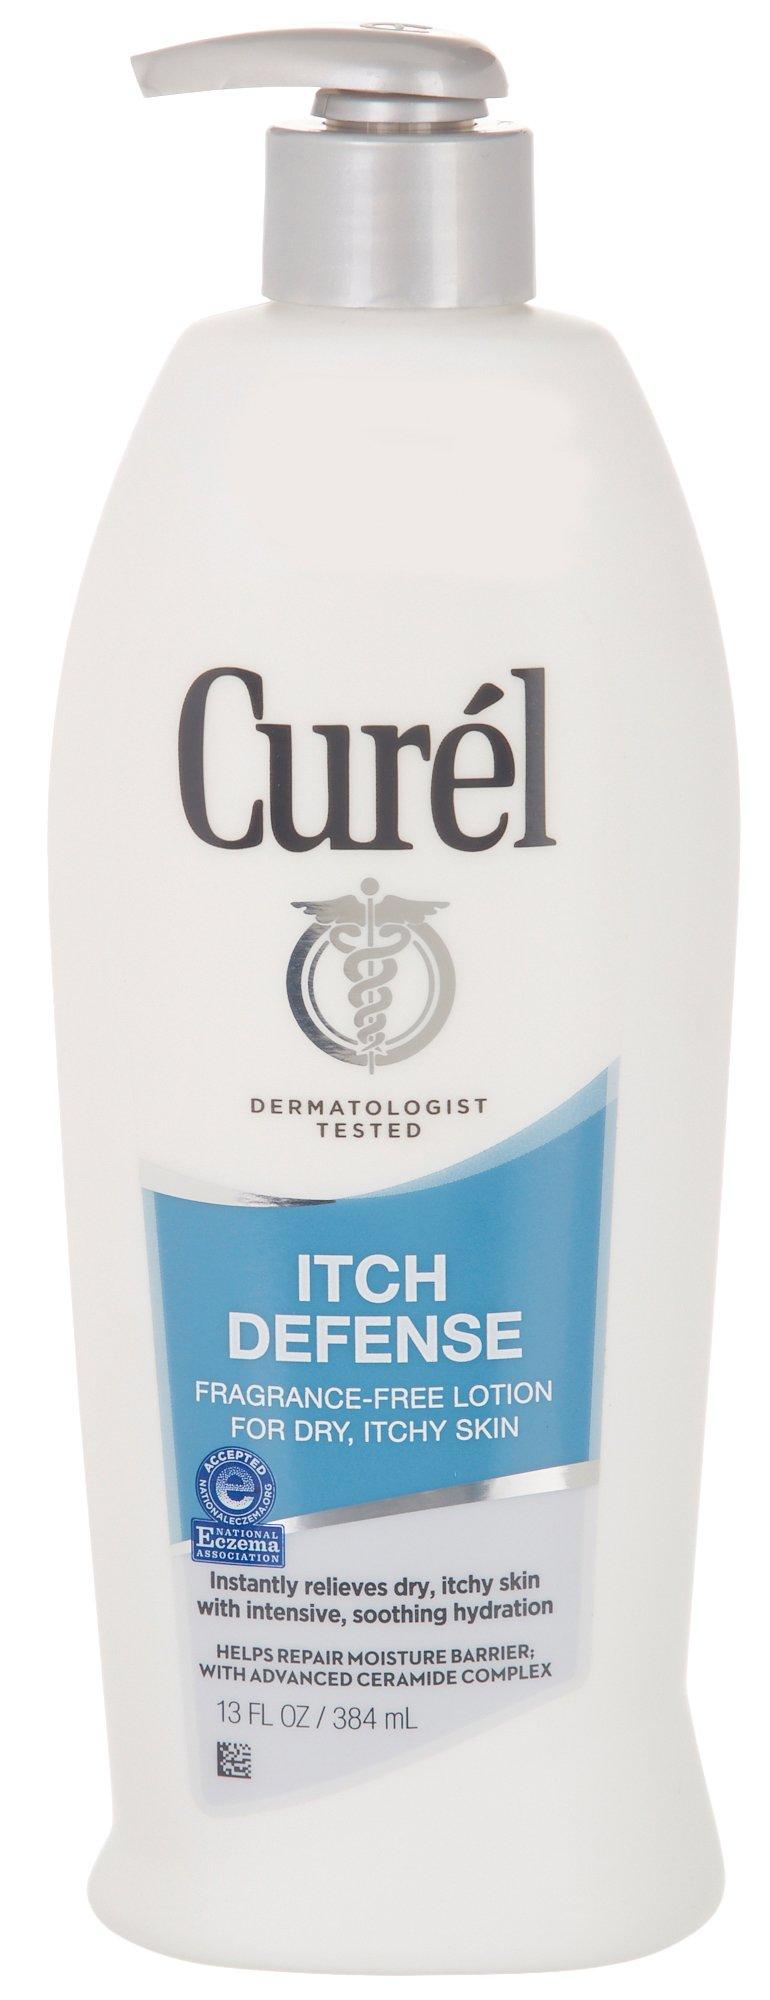 13 oz Itch Defense Fragrance-Free Lotion